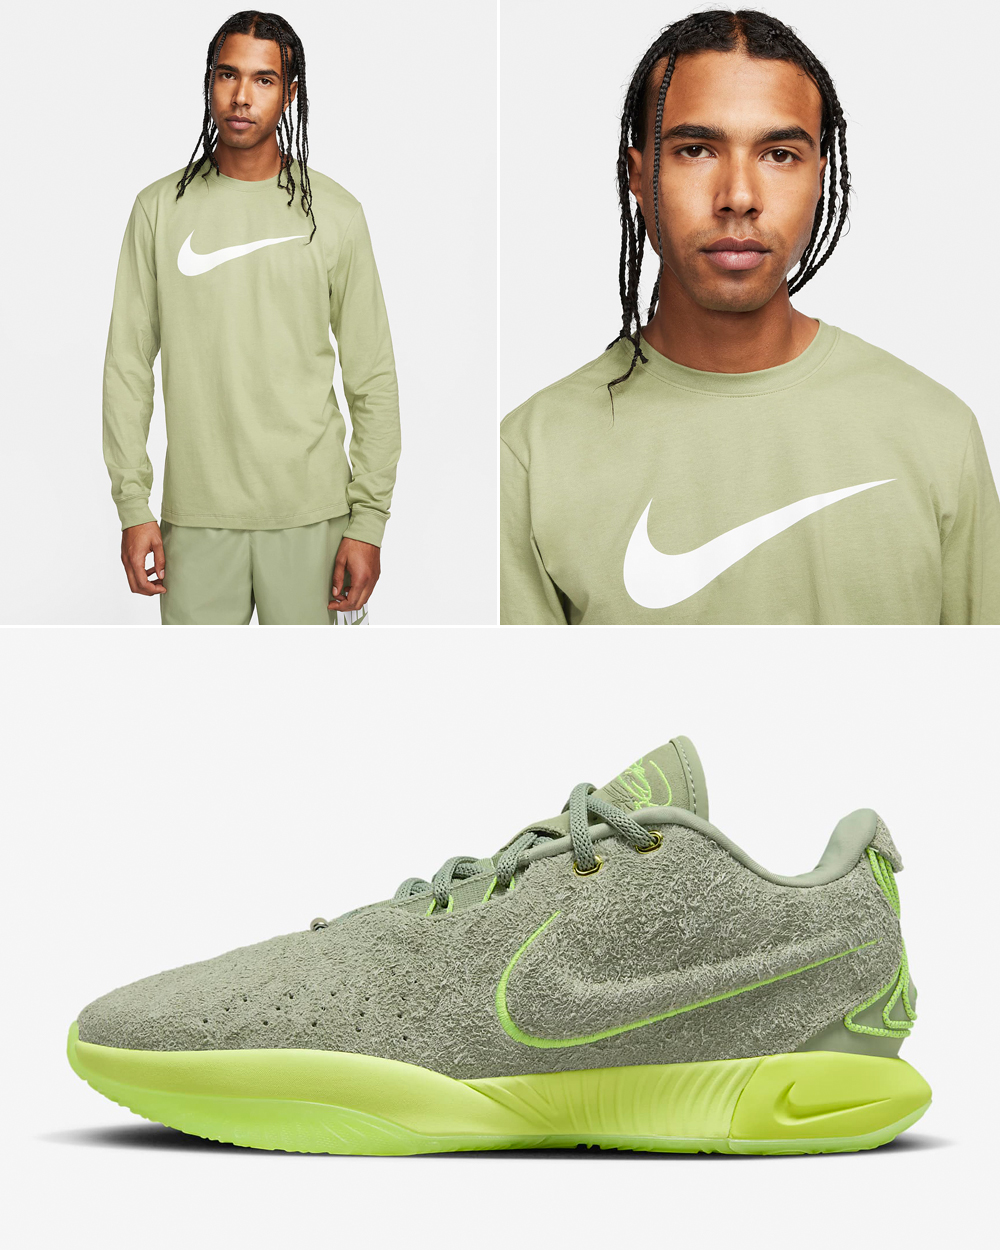 Nike-LeBron-21-Algae-Oil-Green-Shirt-Outfit